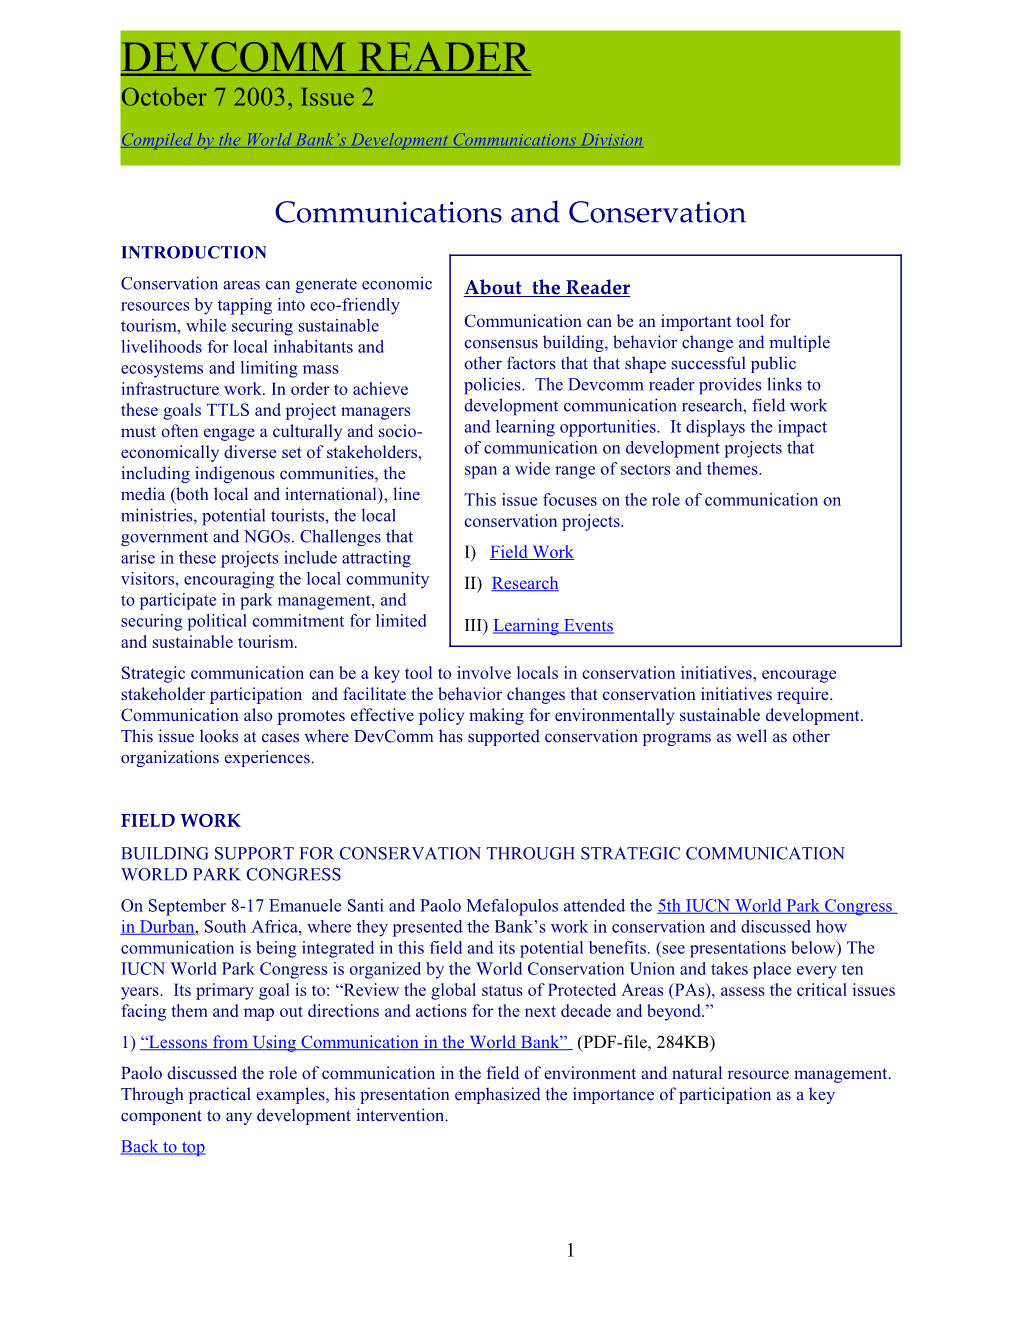 Devcomm Reader, Communication for Conservation